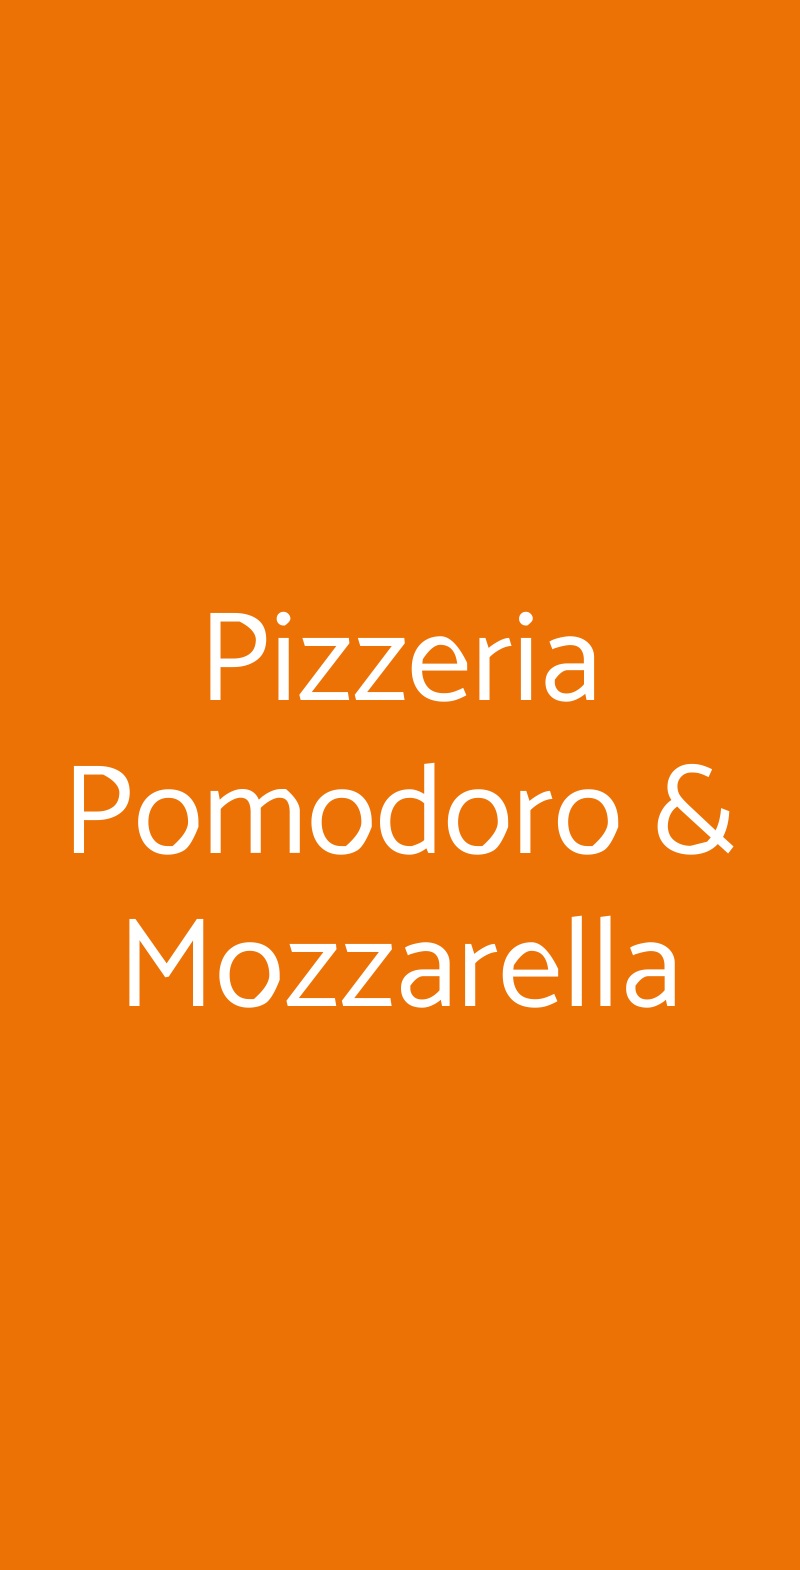 Pizzeria Pomodoro & Mozzarella Pisa menù 1 pagina